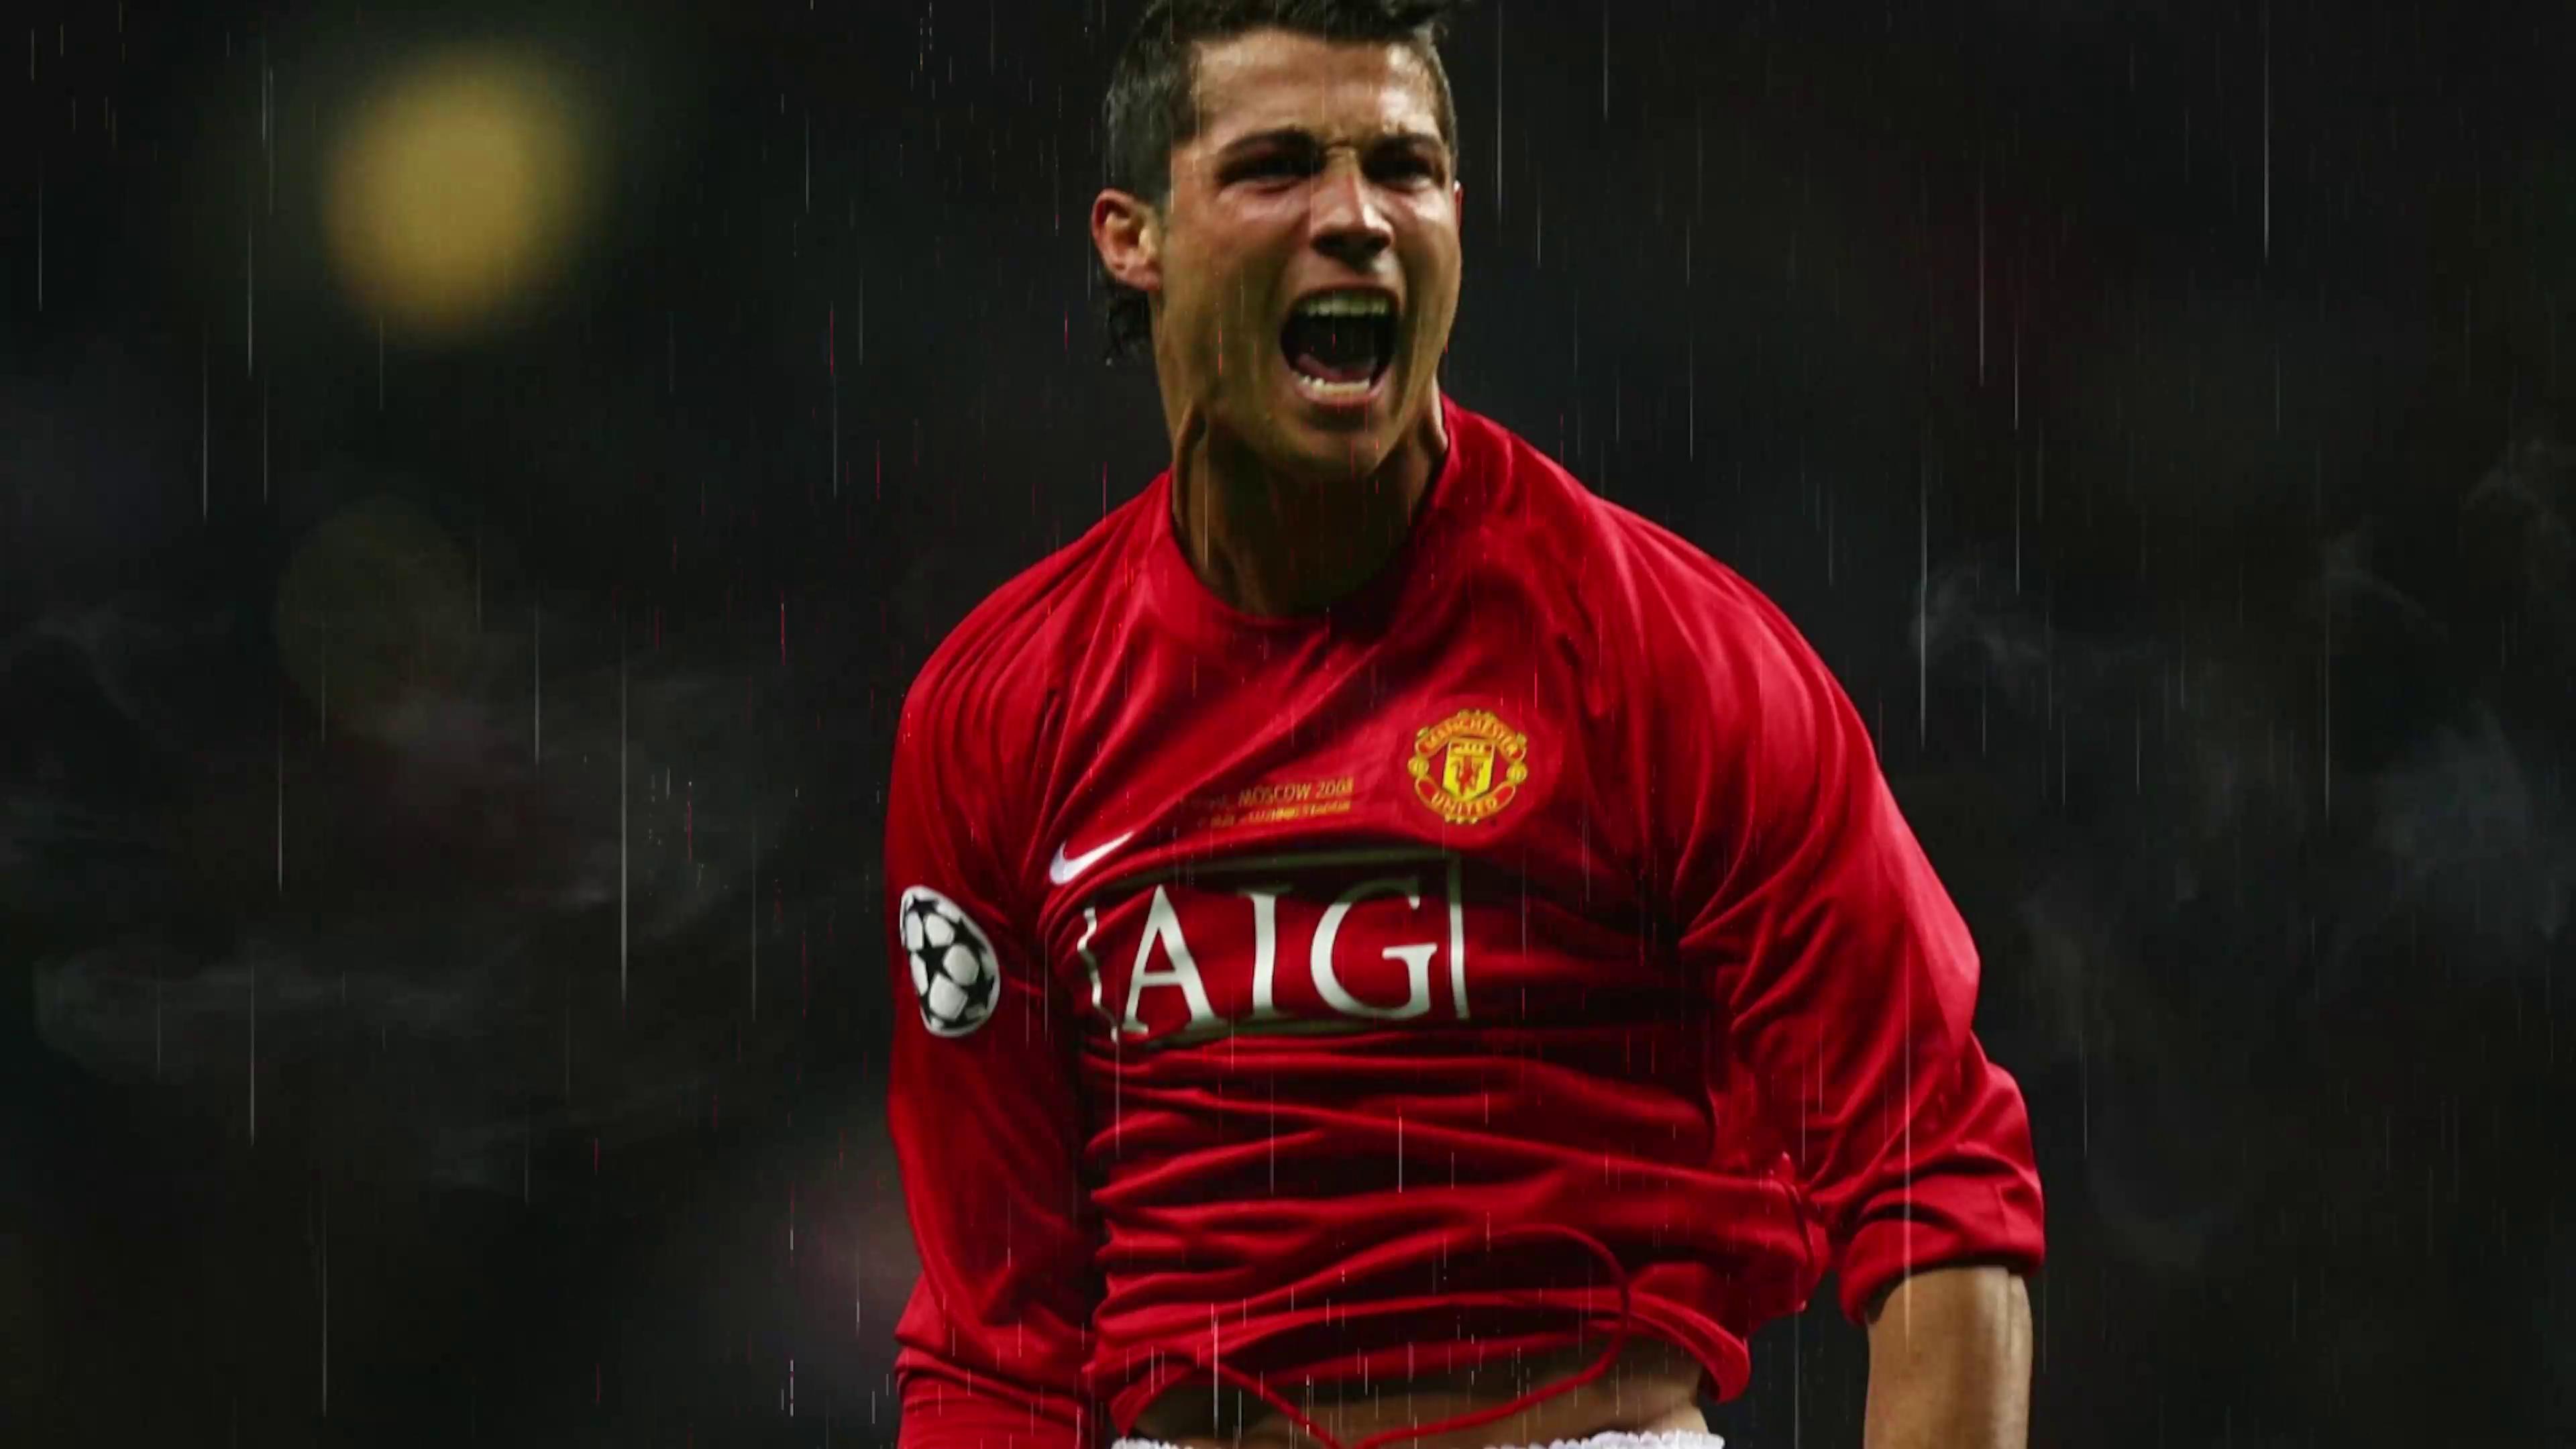 Lively Ronaldo Portrait: 4K Football Live Wallpaper - free download